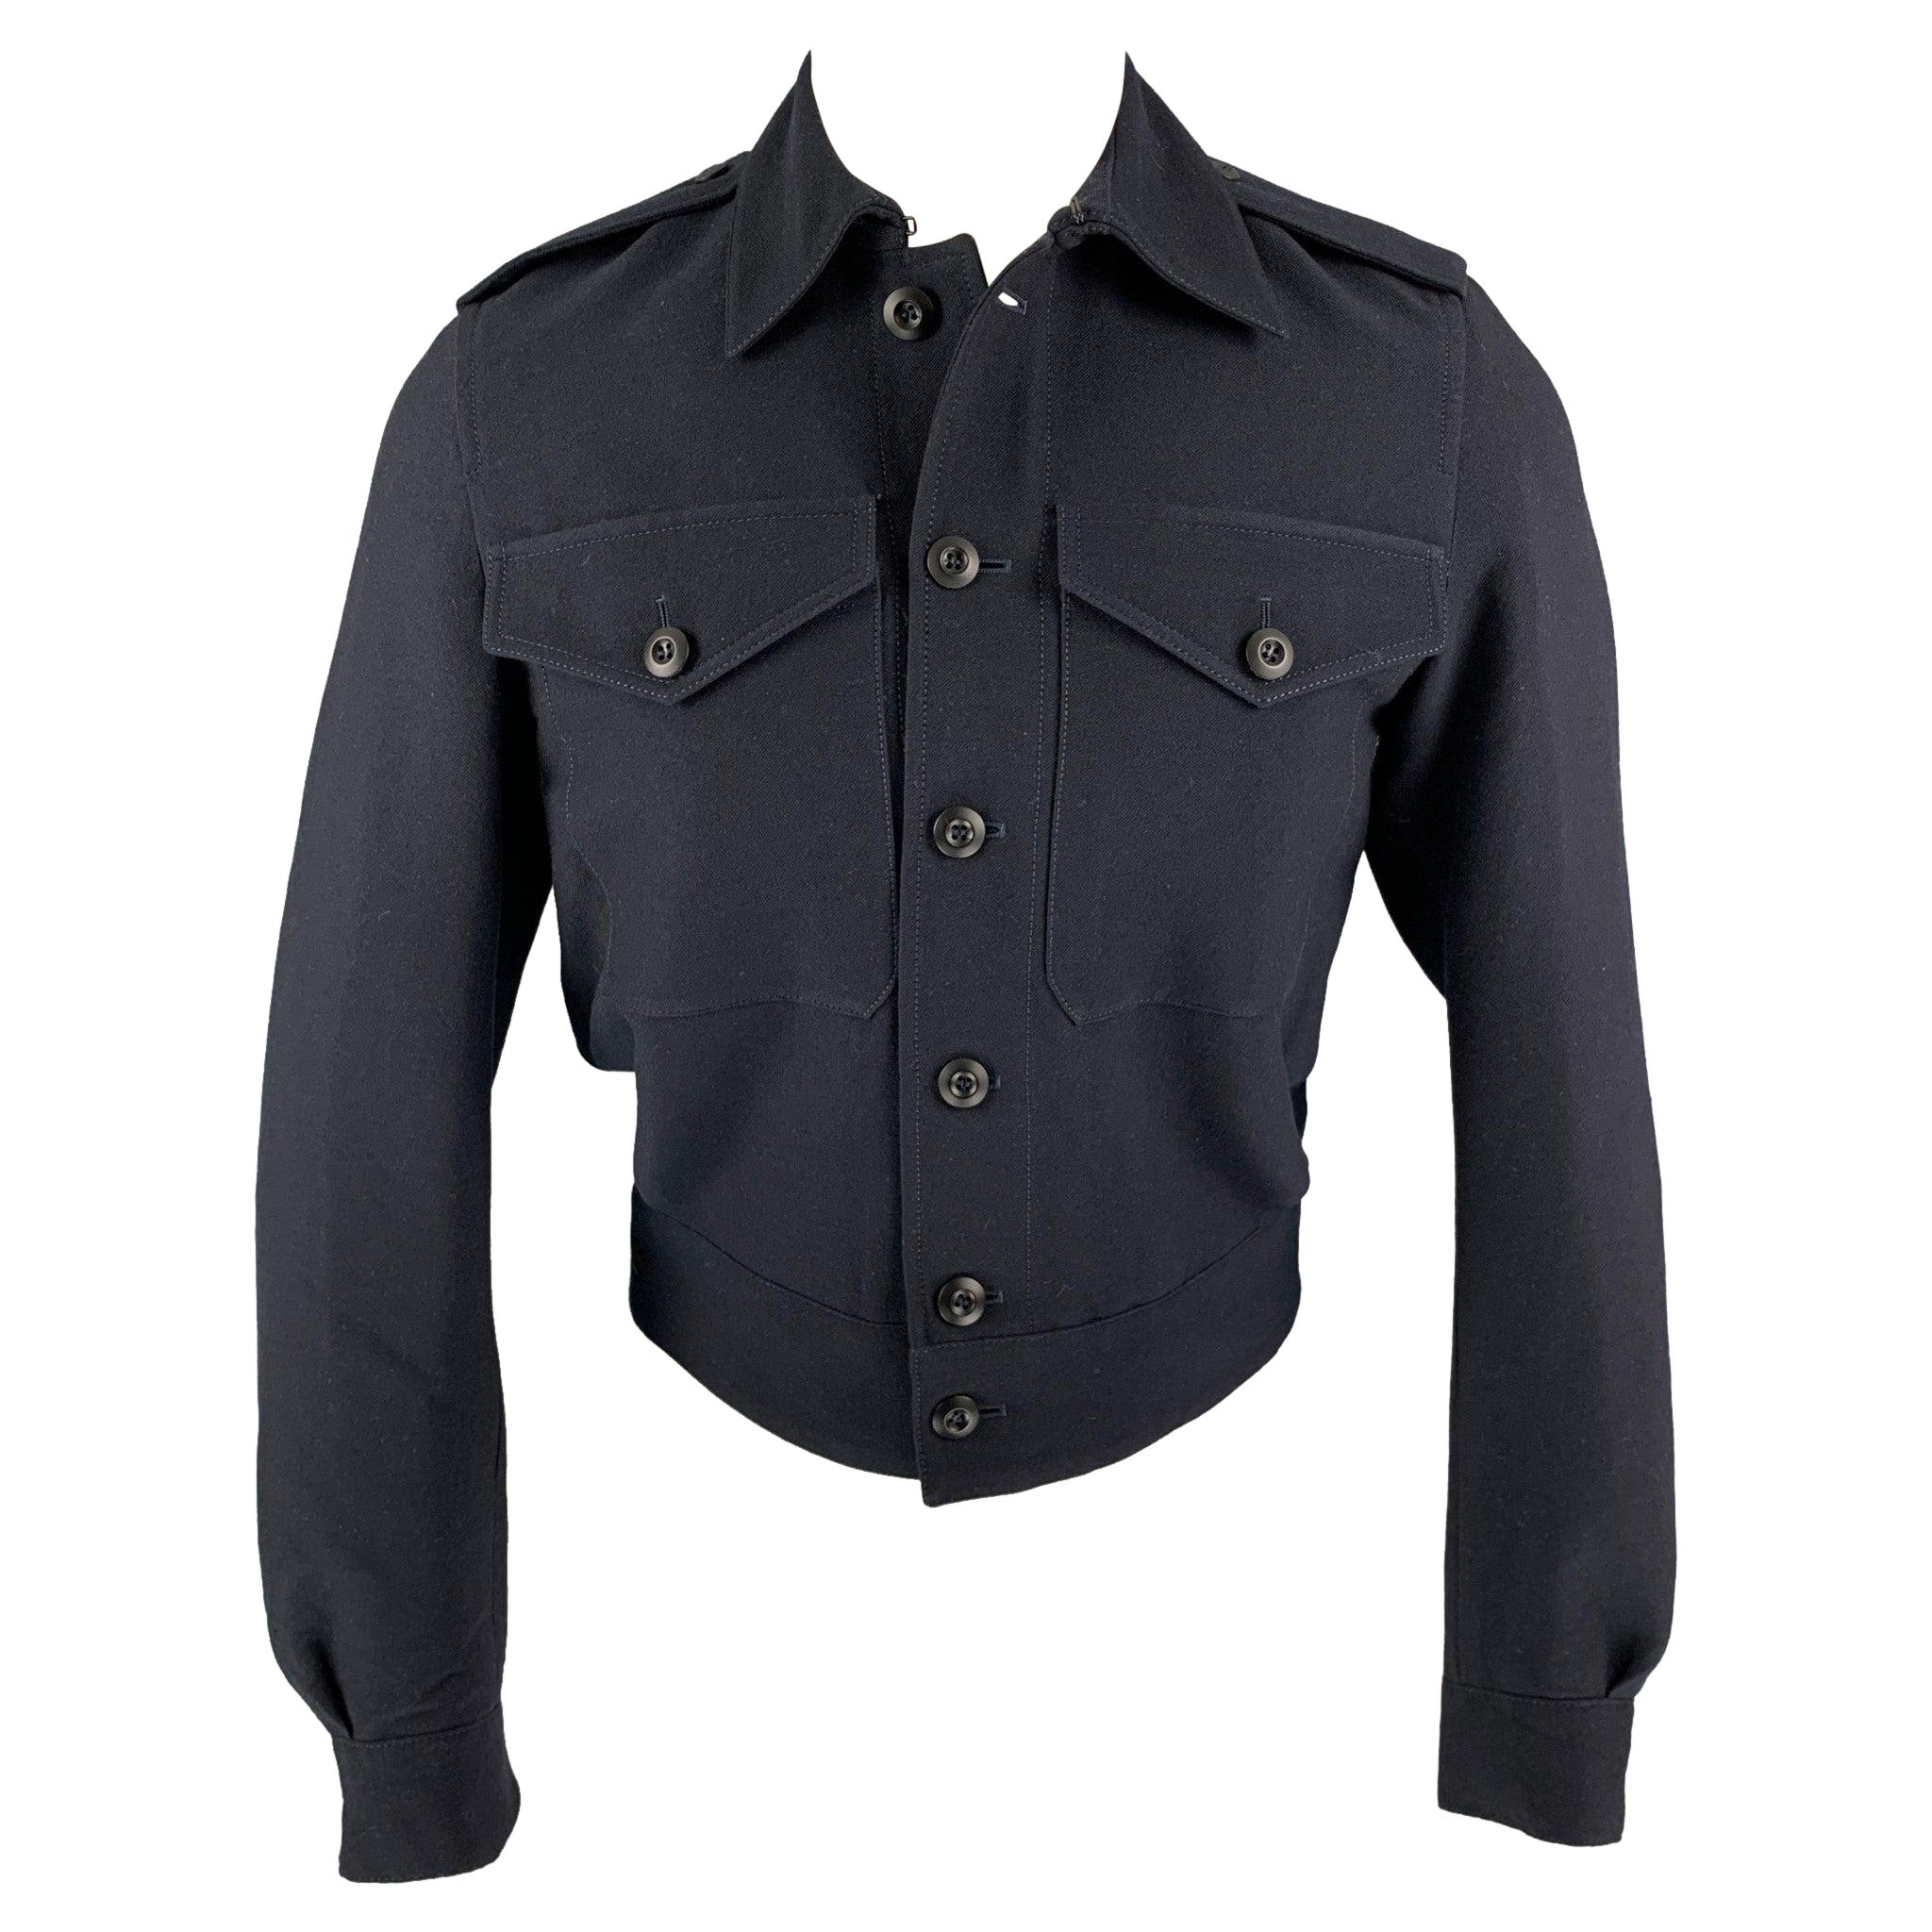 BURBERRY PRORSUM Spring 2015 Size 38 Navy Blue Cashmere Blend Jacket For Sale